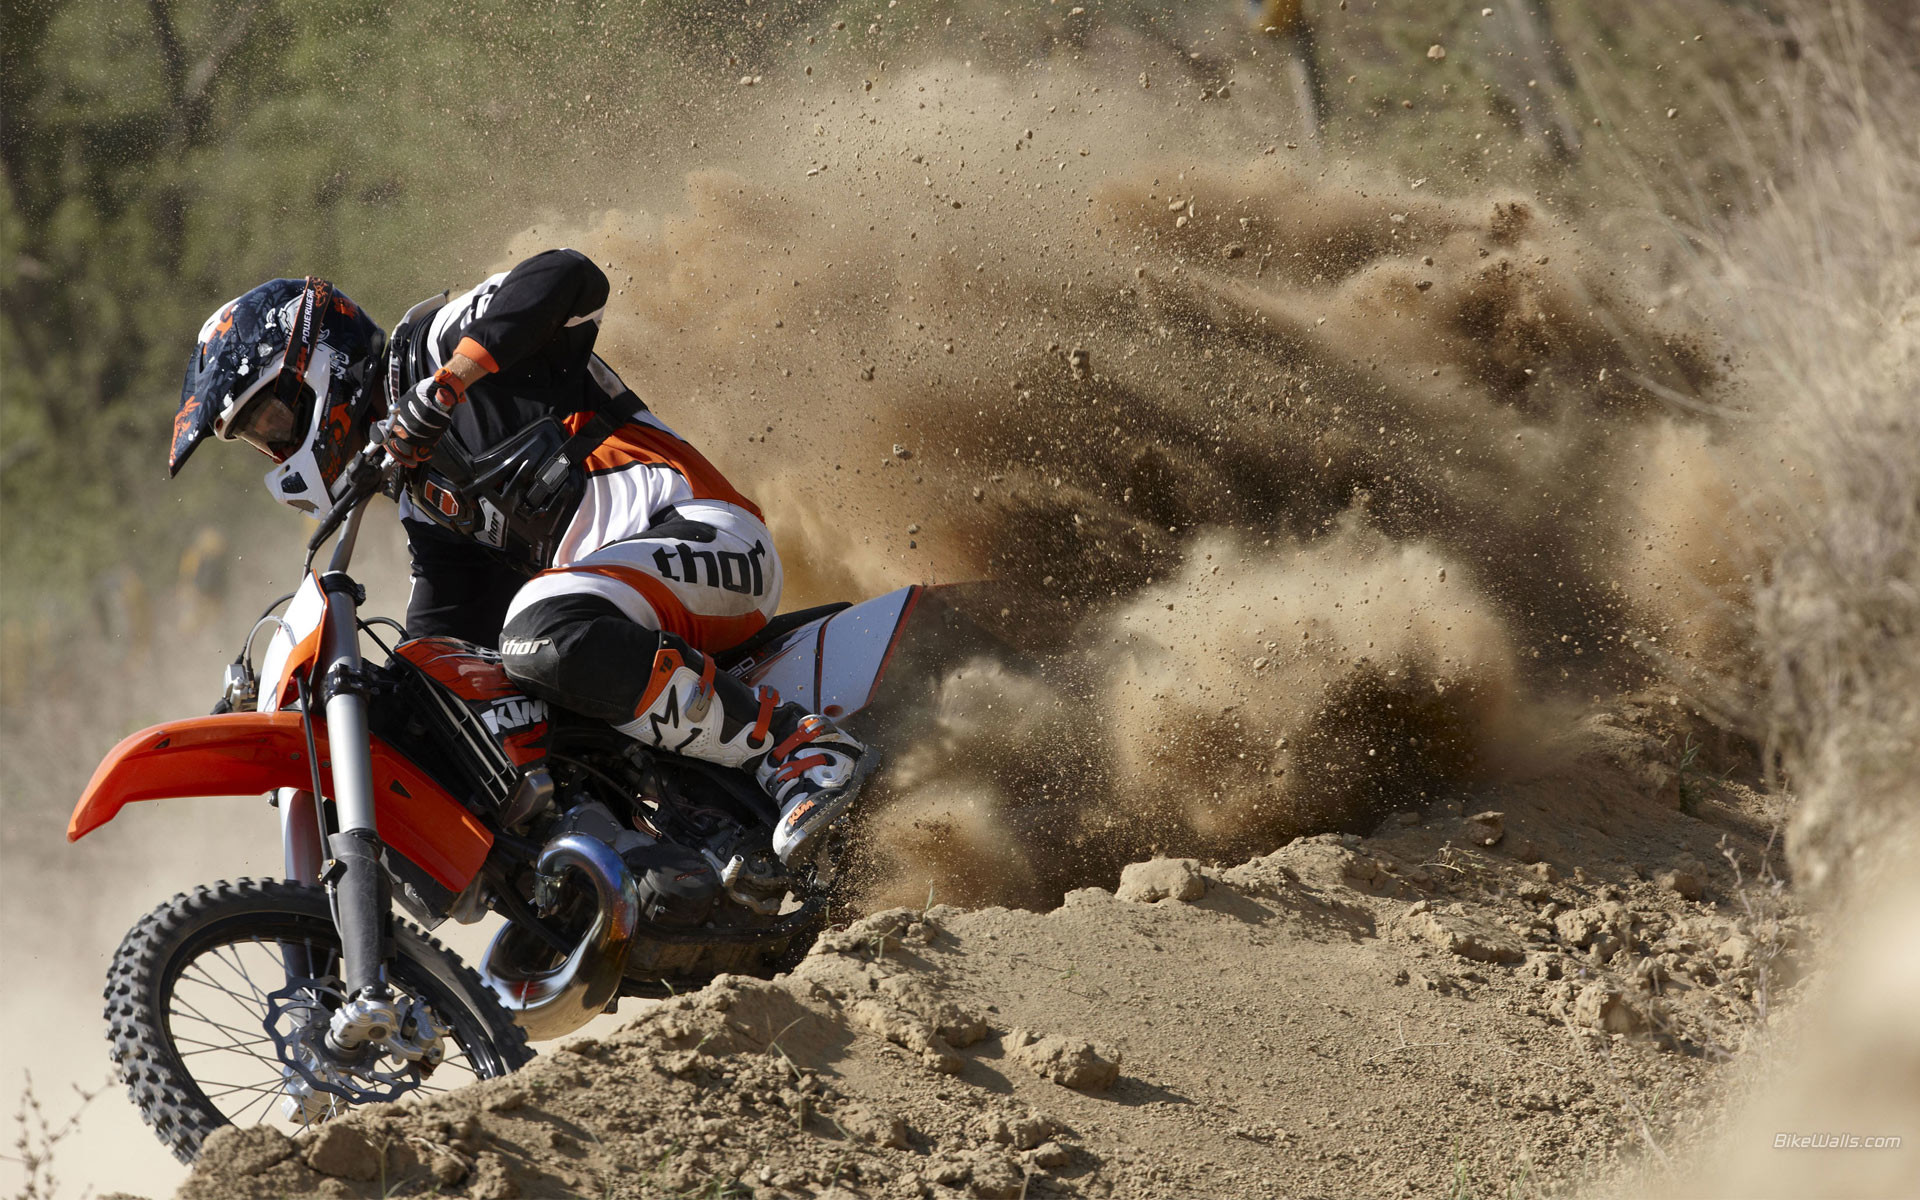 1920x1200 Dirt dirt bikes motocross motorbikes racing ktm 250 wallpaper |  |  17714 | WallpaperUP